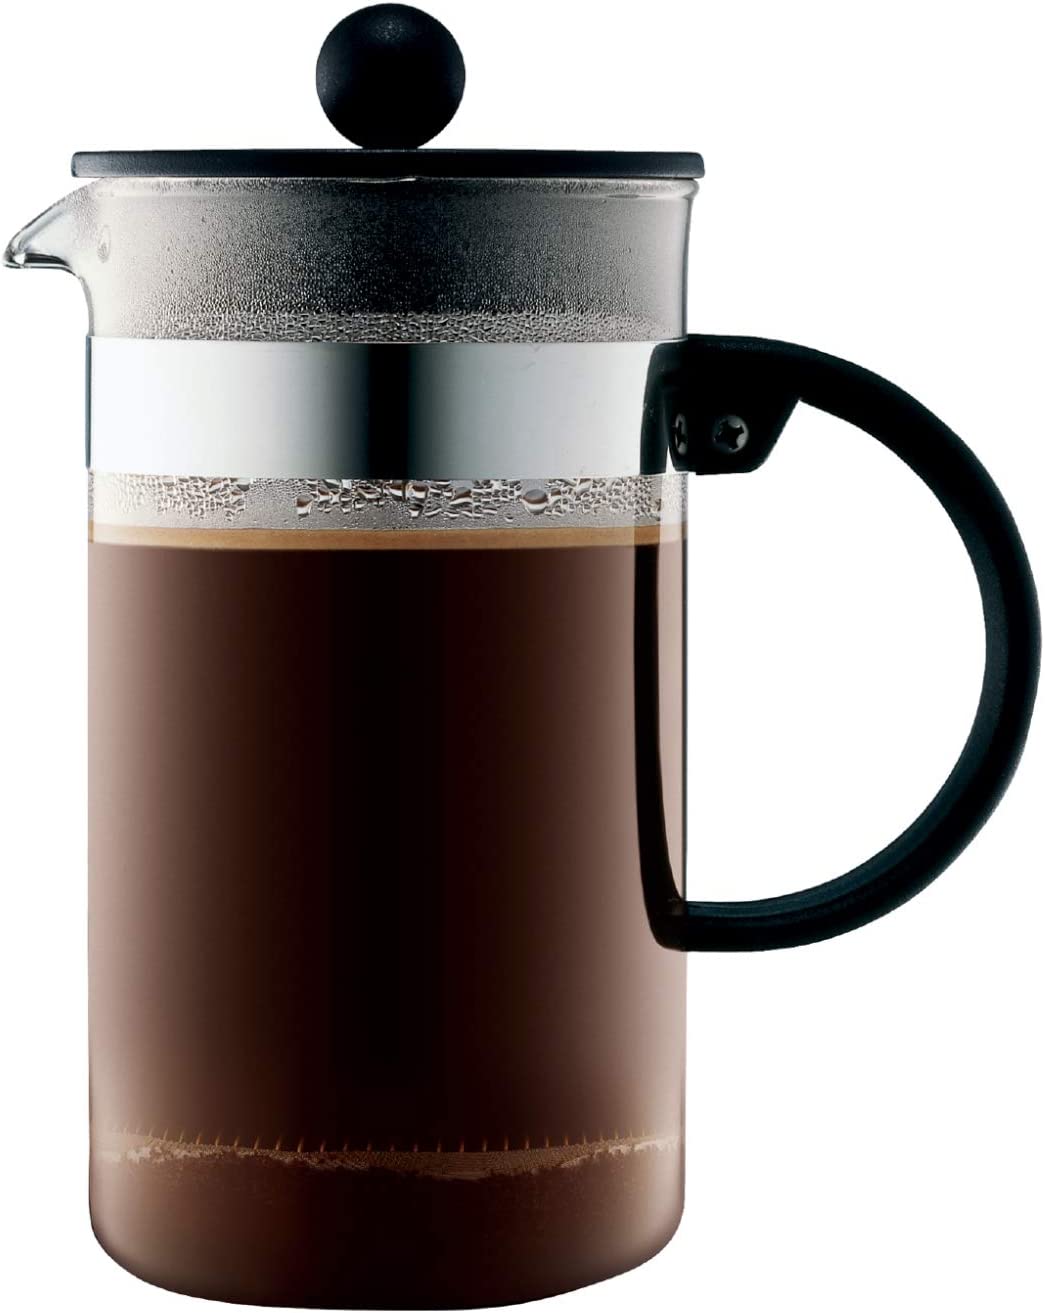 Bodum 1508-10 replacement glass to coffee maker 8 cups, 1.0 l, Ø 9.6 cm diameter